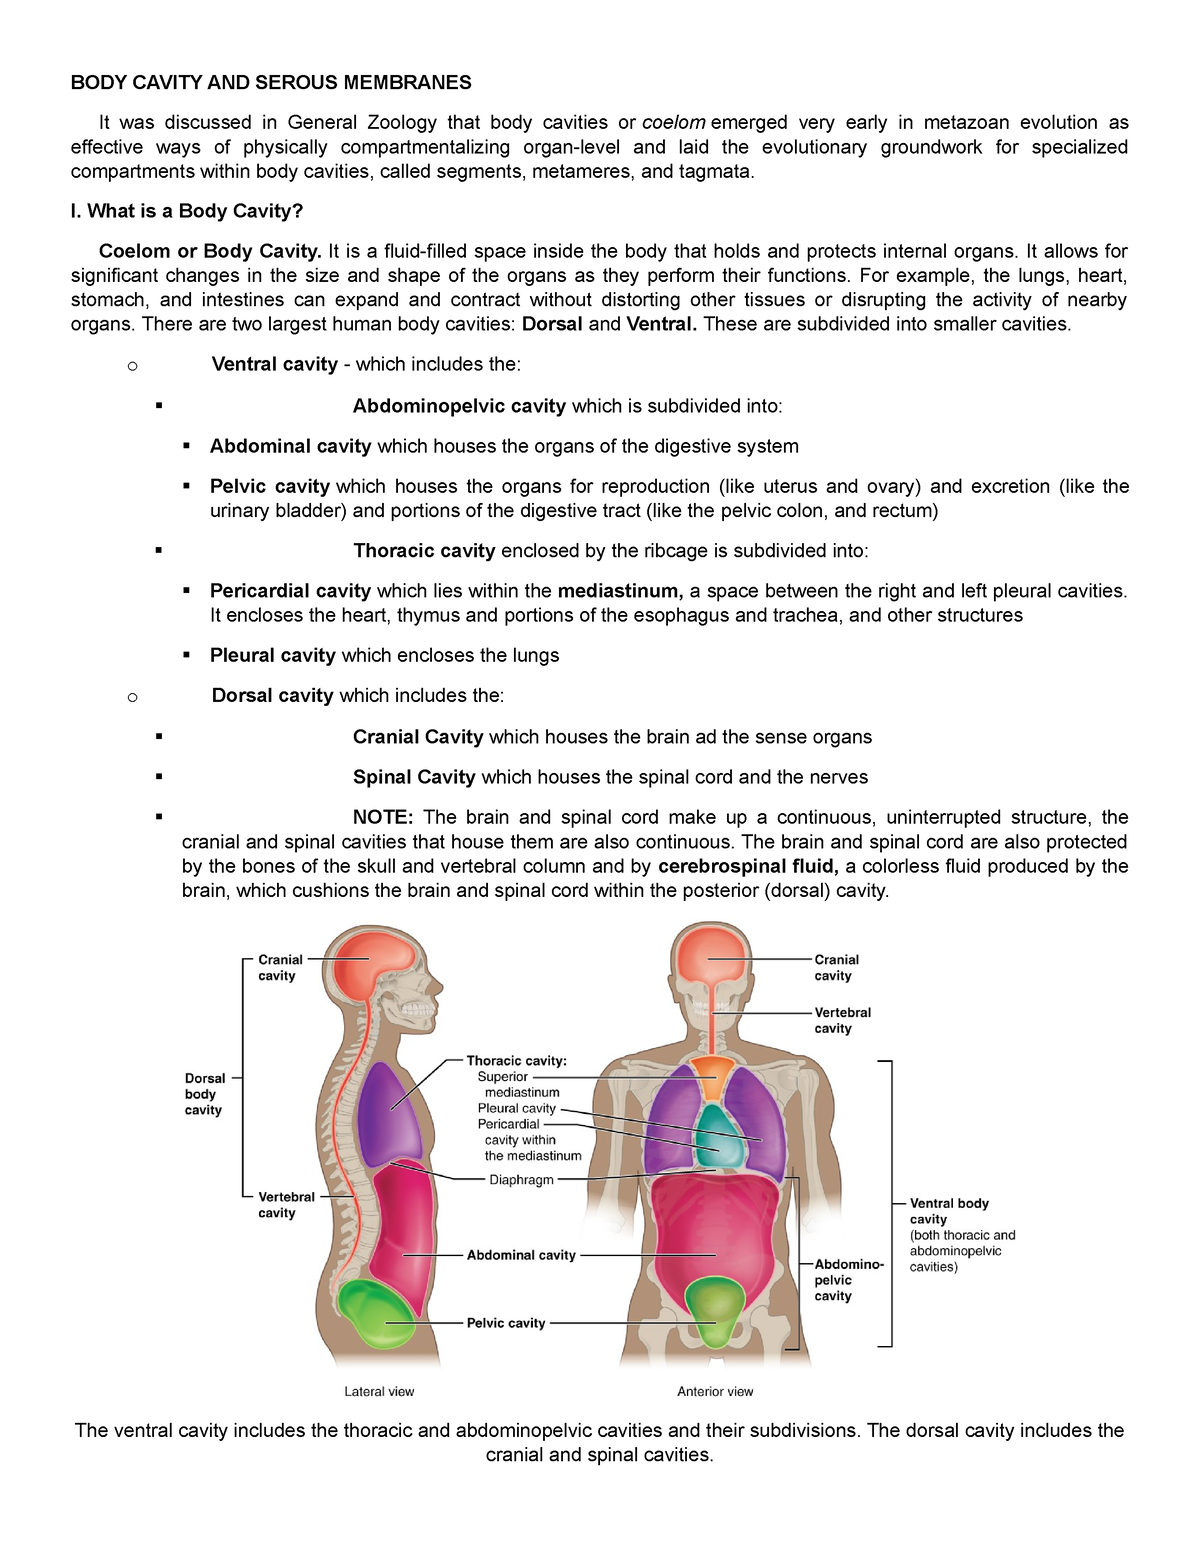 Dorsal Body Cavity {Body Cavities} Diagram